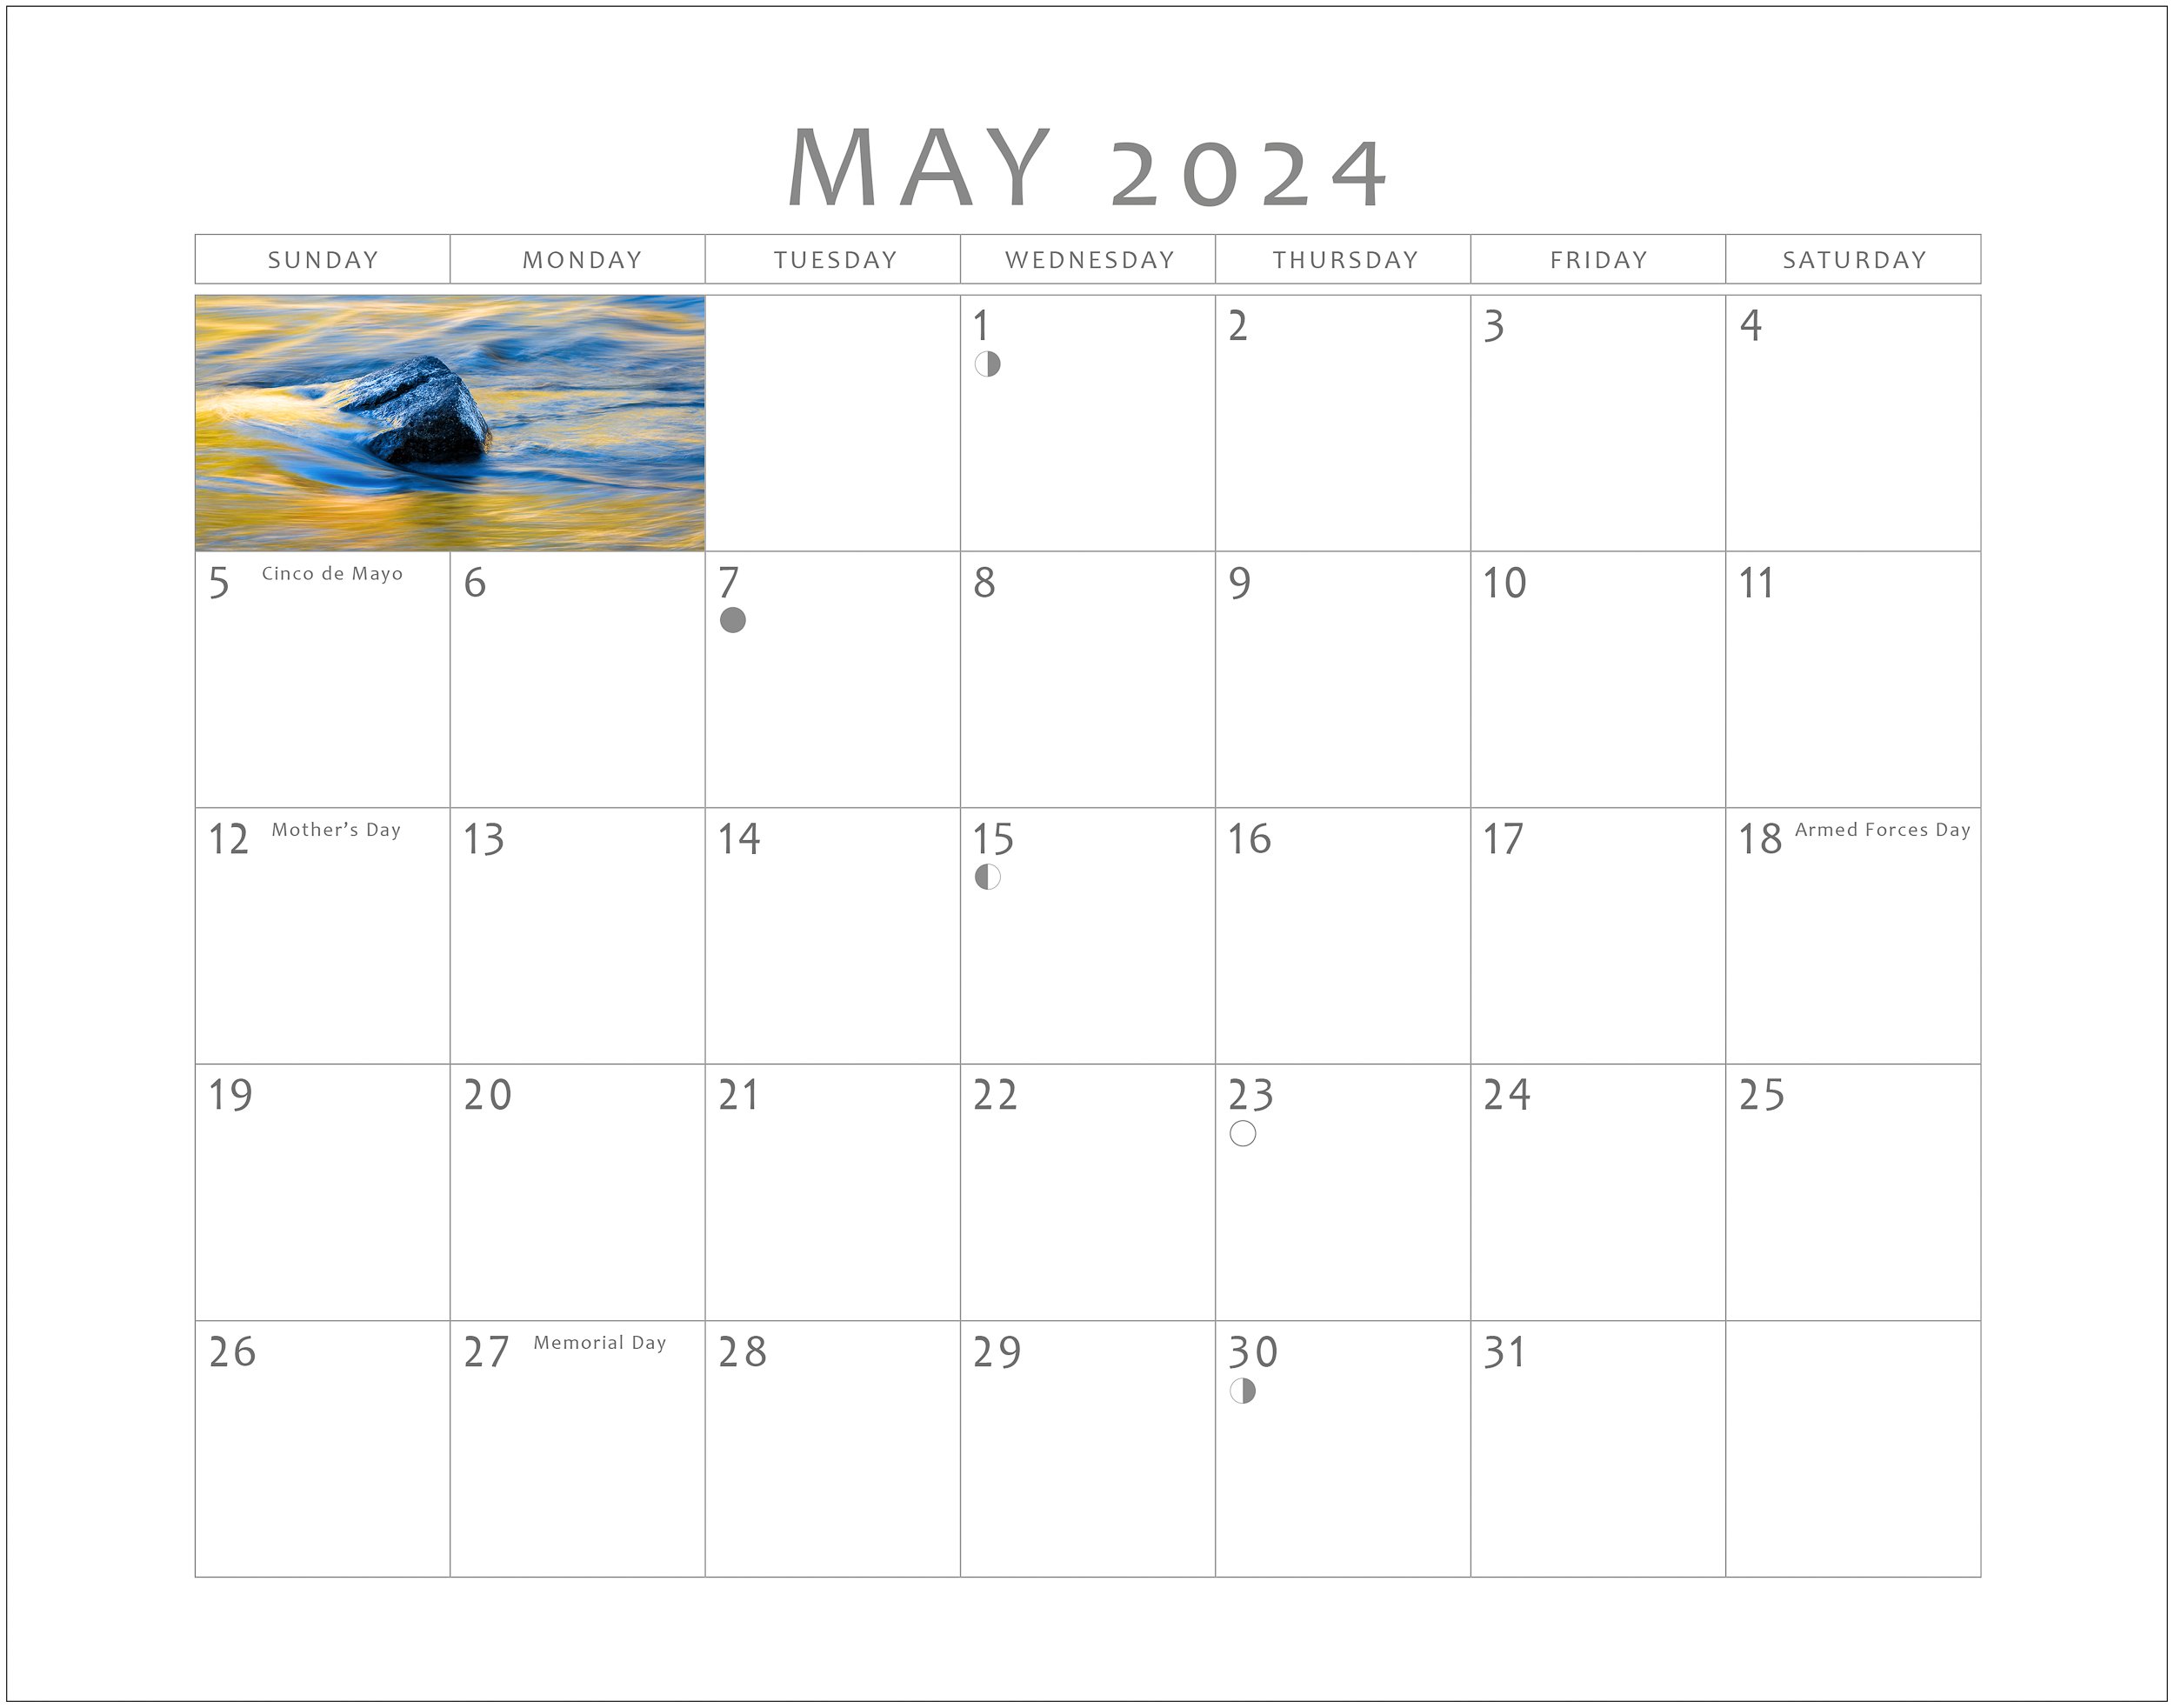 5 NIP 2024 Calendar Final May W Blk Border 